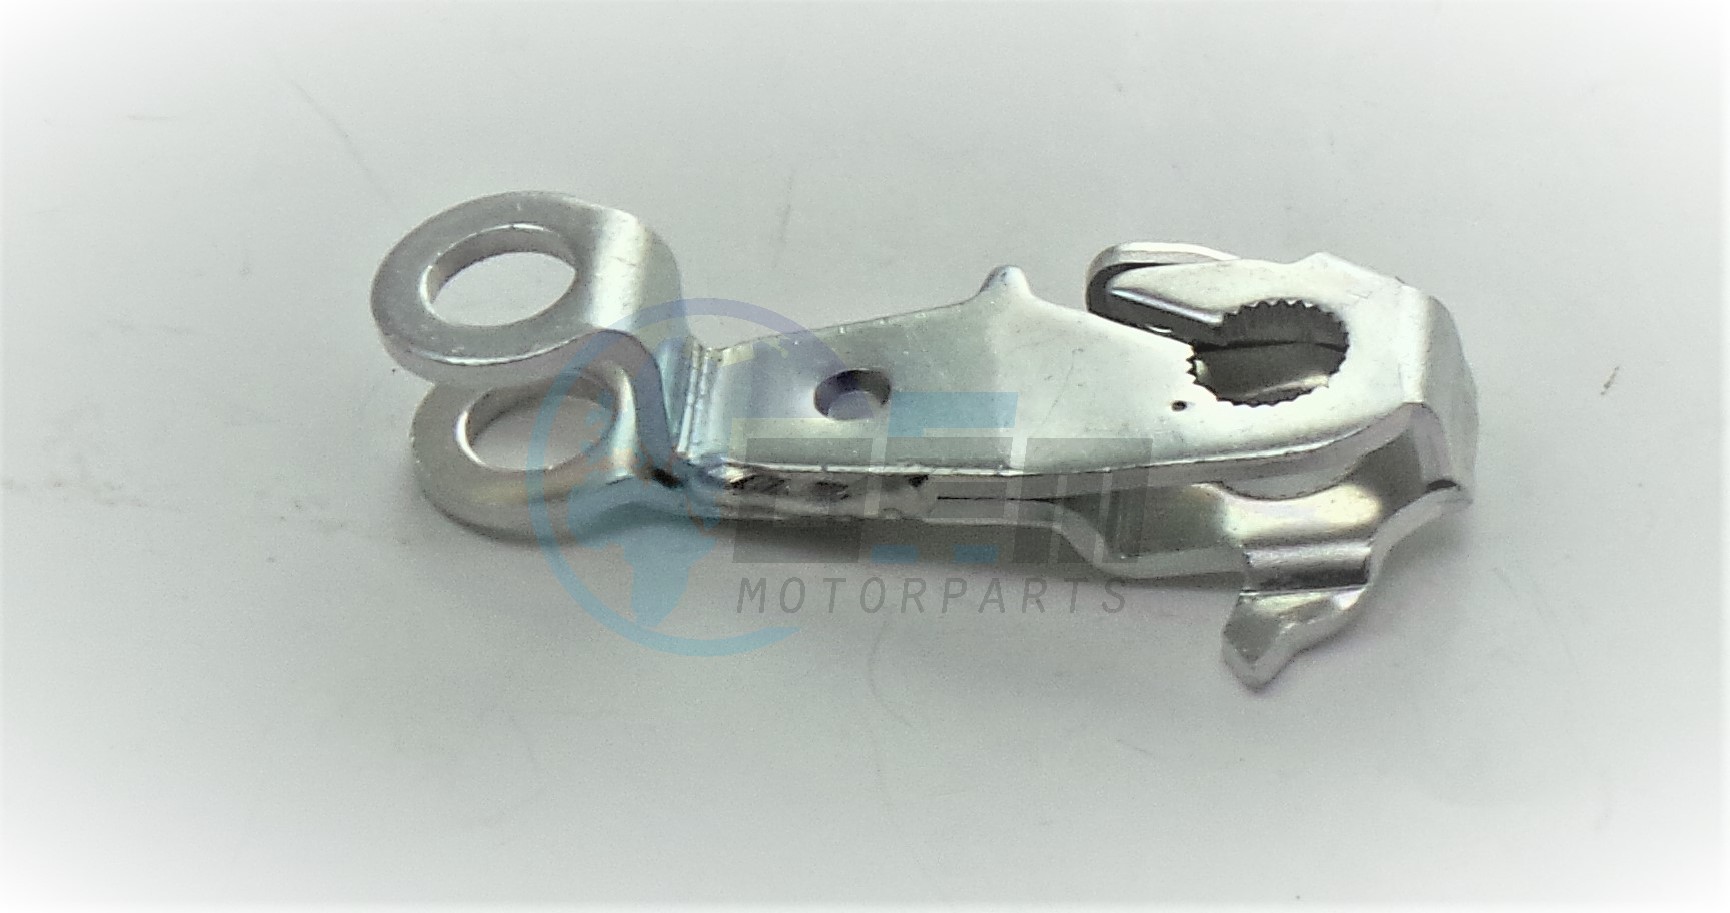 Product image: Peugeot - 734187 - BRAKE ARM (FLUTED FLASK)  0